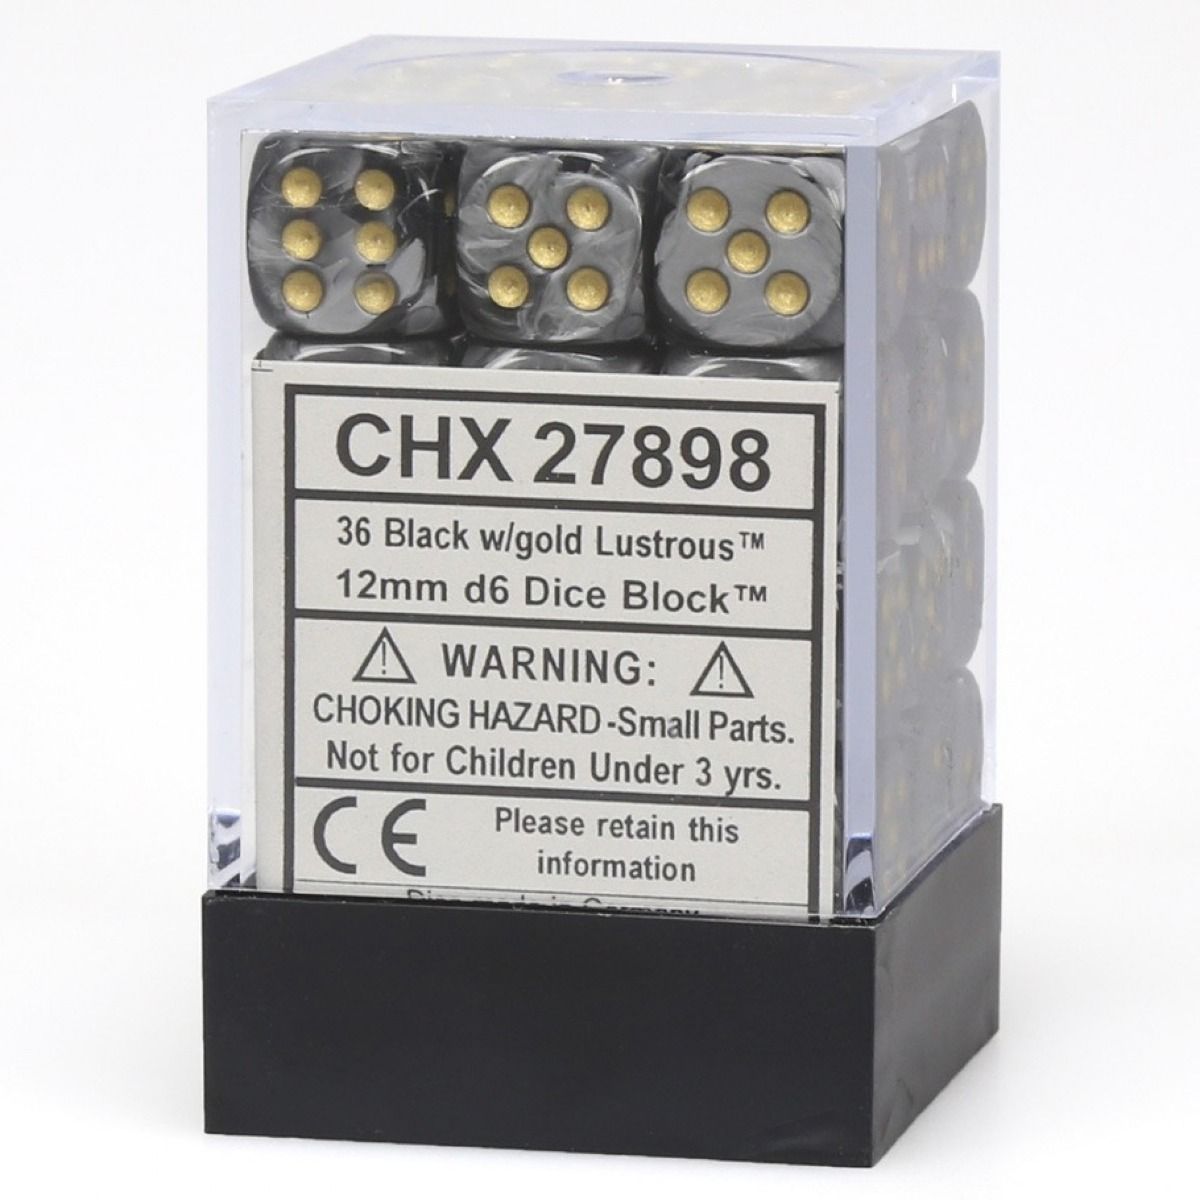 CHX 27898 Lustrous 12mm d6 Black/Gold Block (36)